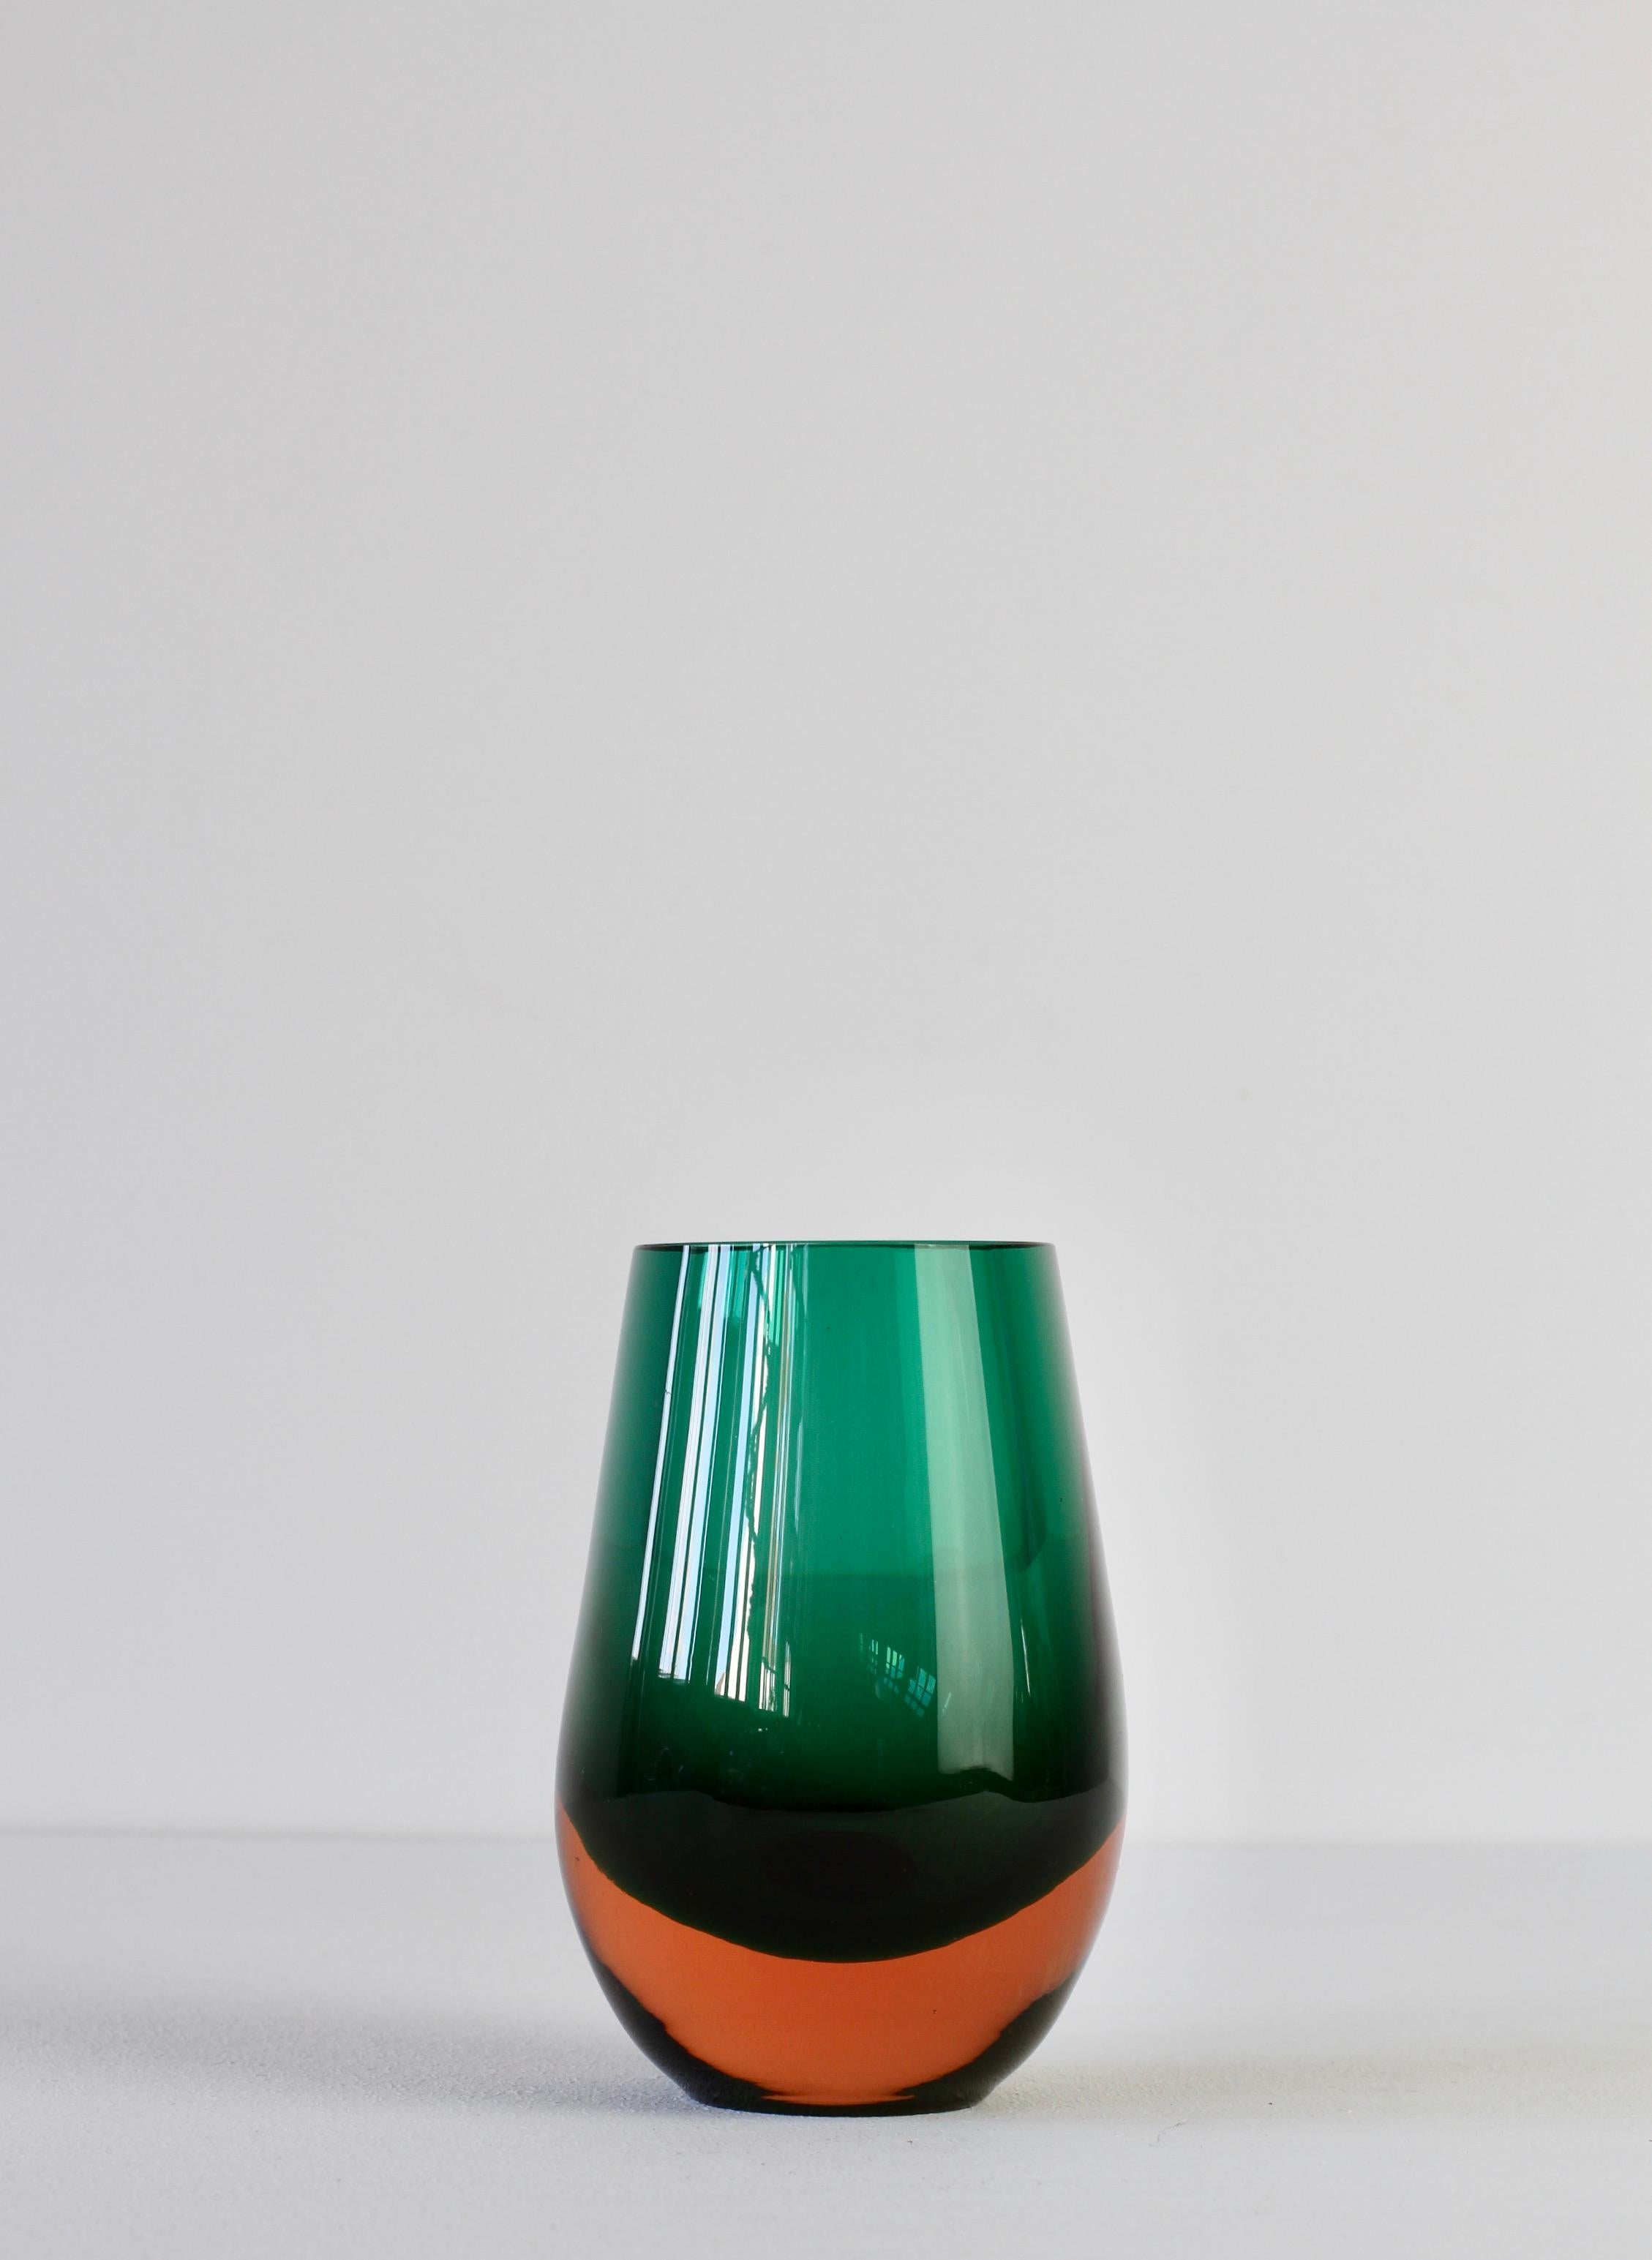 20th Century Vintage Green and Orange Glass Vase by Konrad Habermeier for Gral Glas, 1965